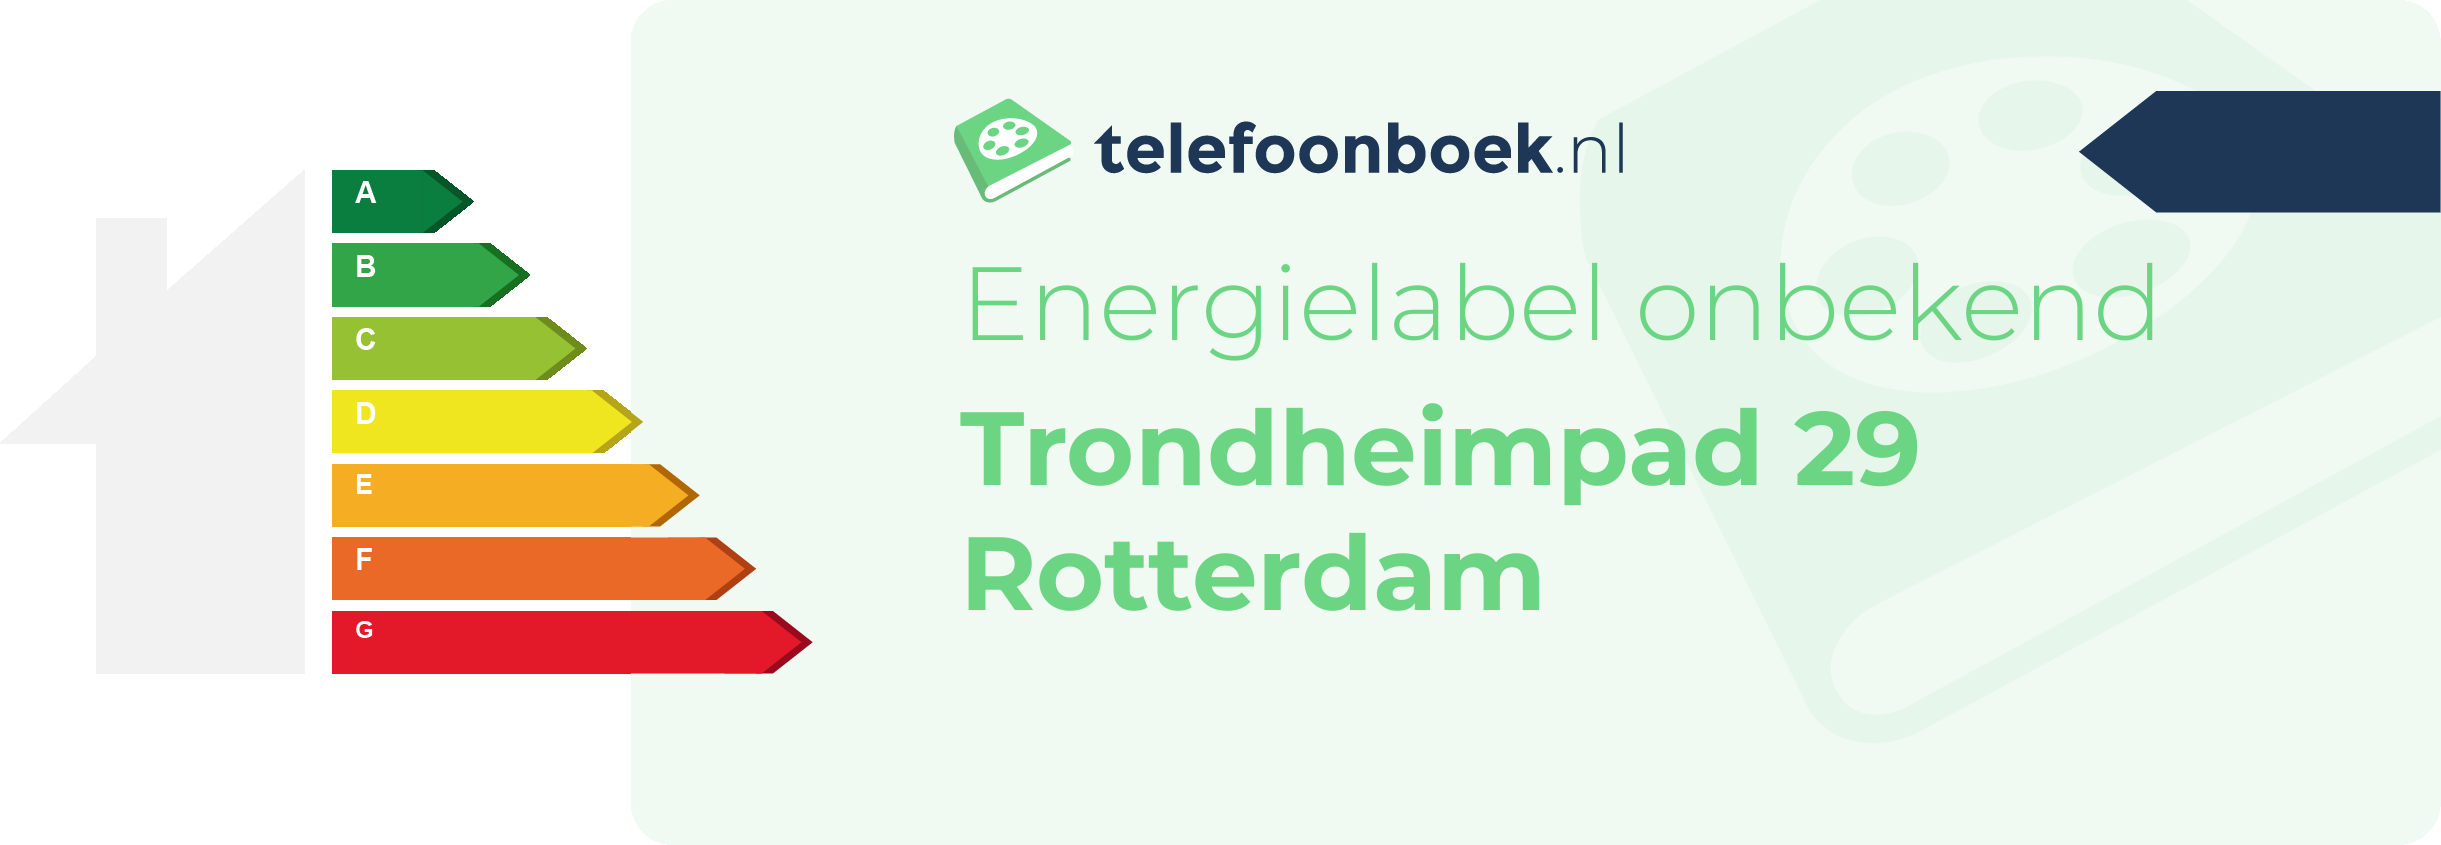 Energielabel Trondheimpad 29 Rotterdam